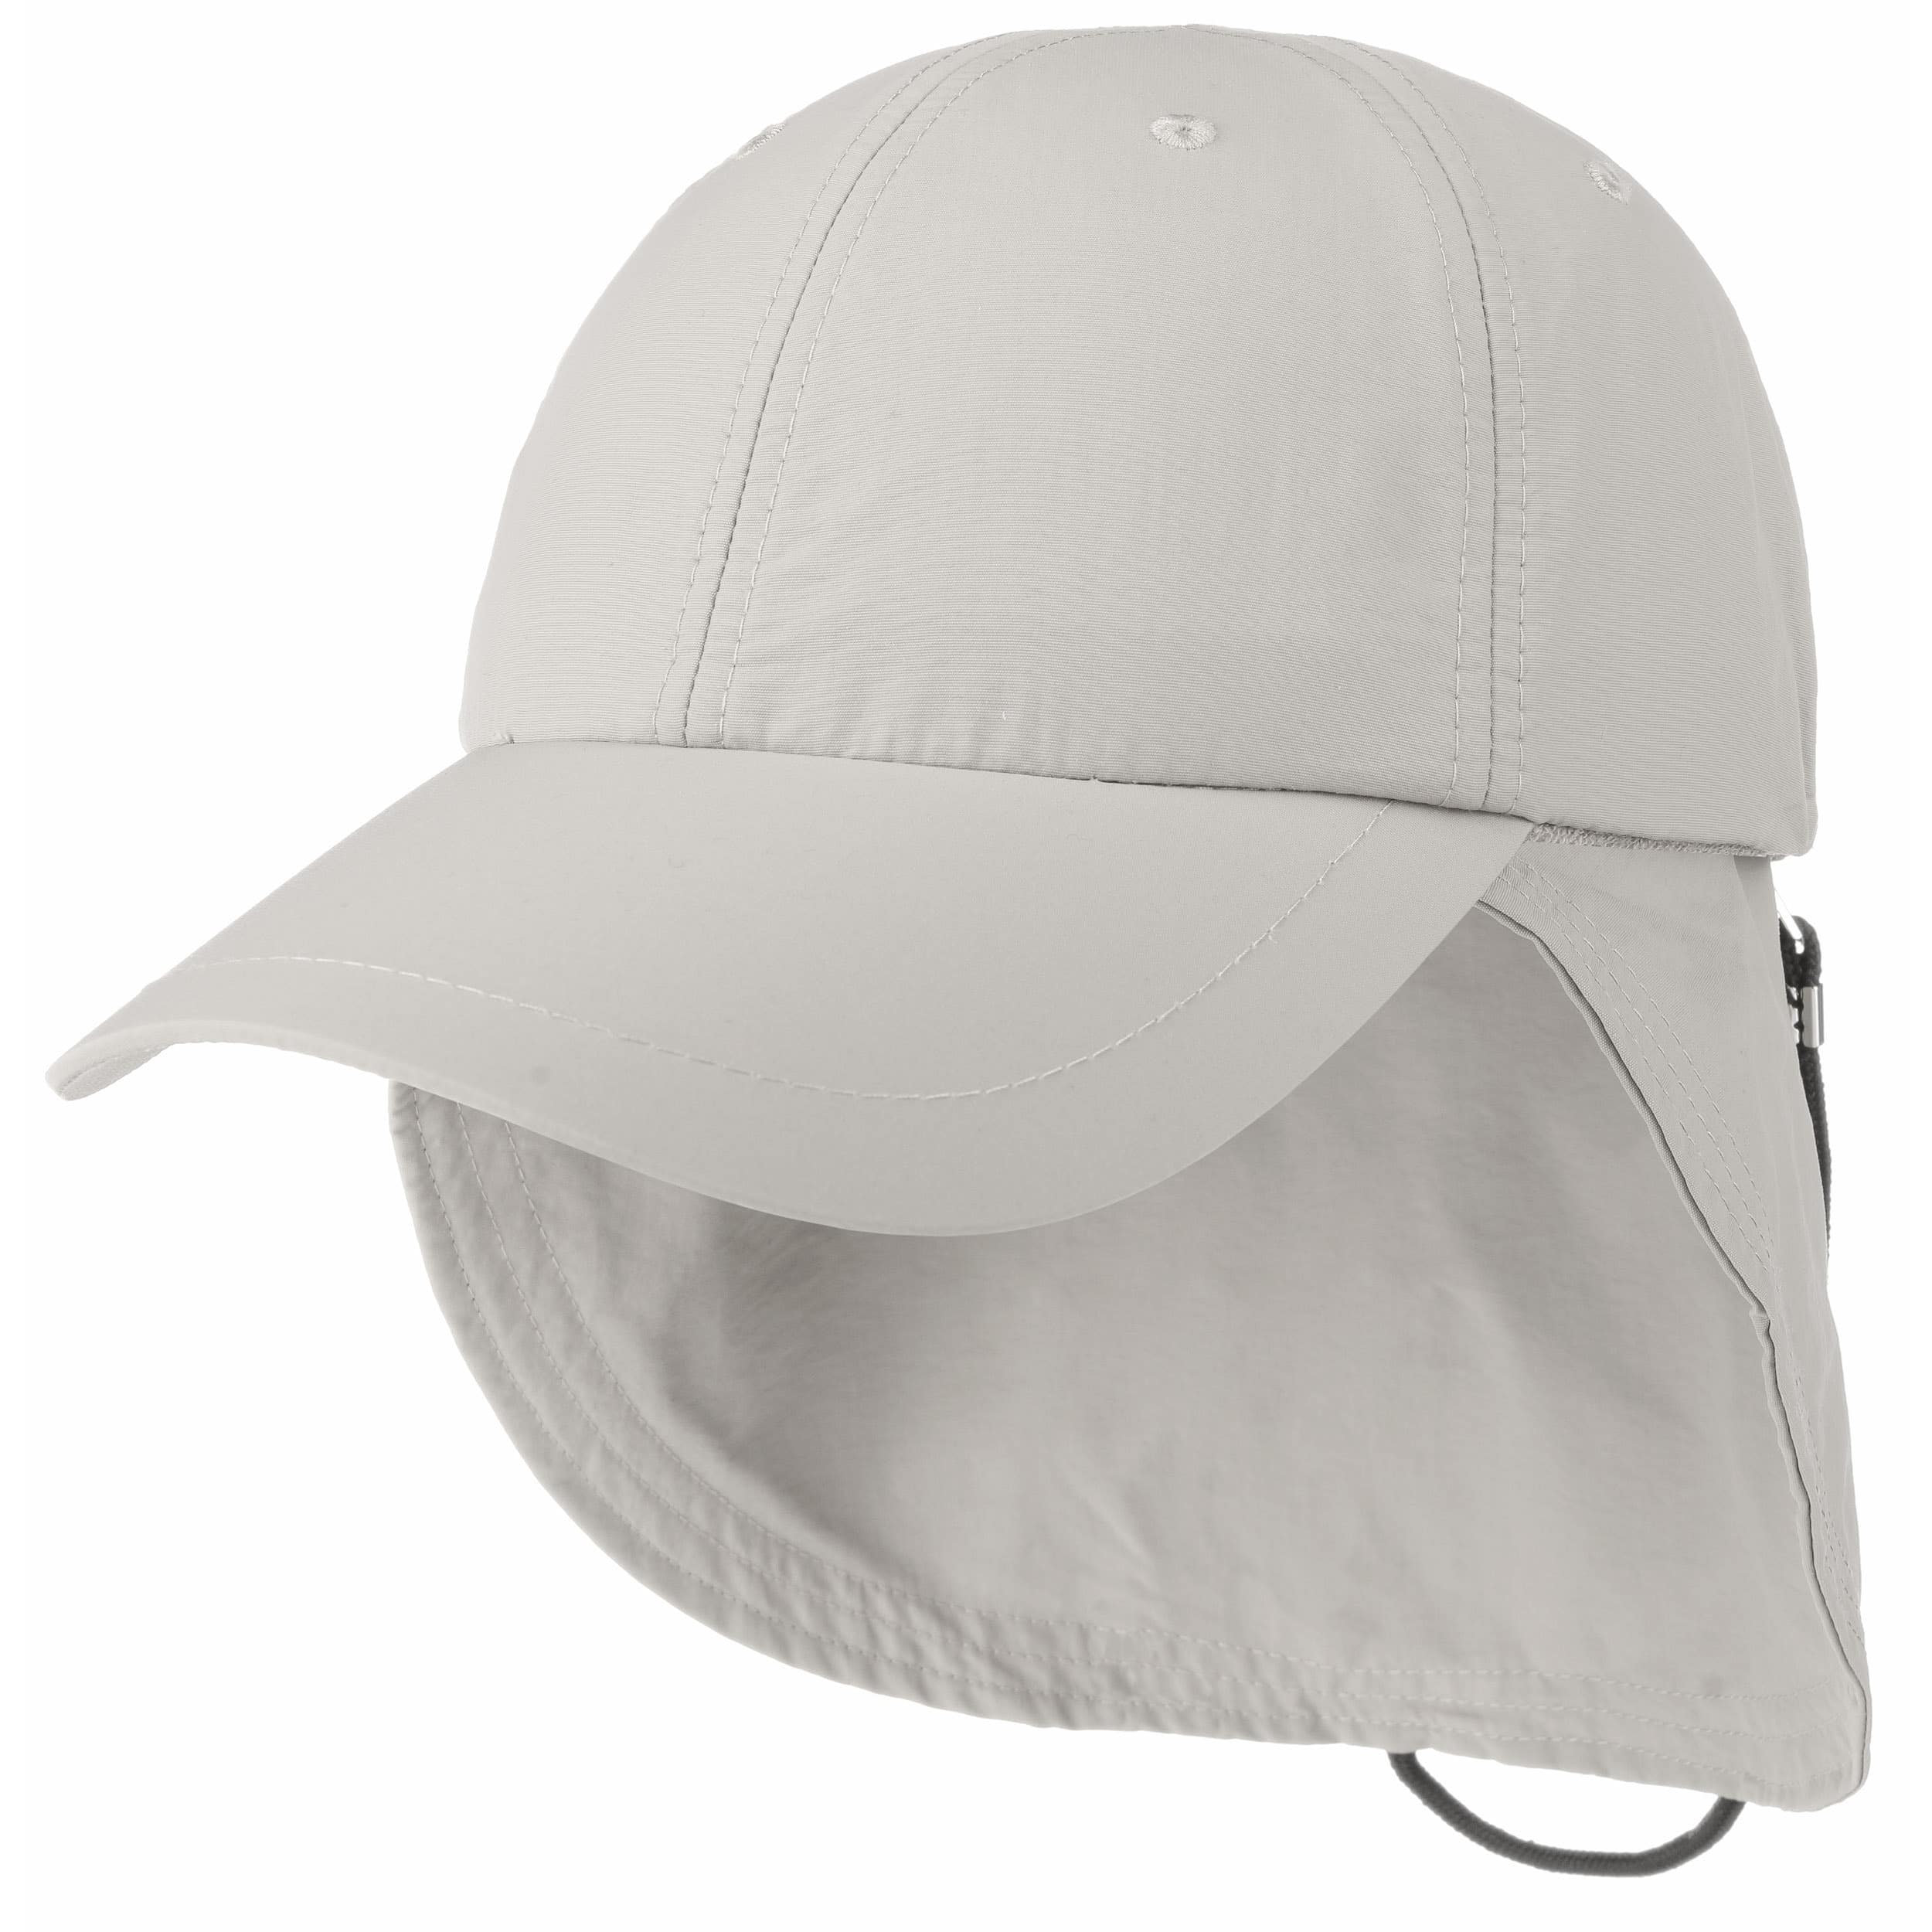 Supplex Cap mit Nackenschutz by Lipodo - 29,95 € | Baseball Caps